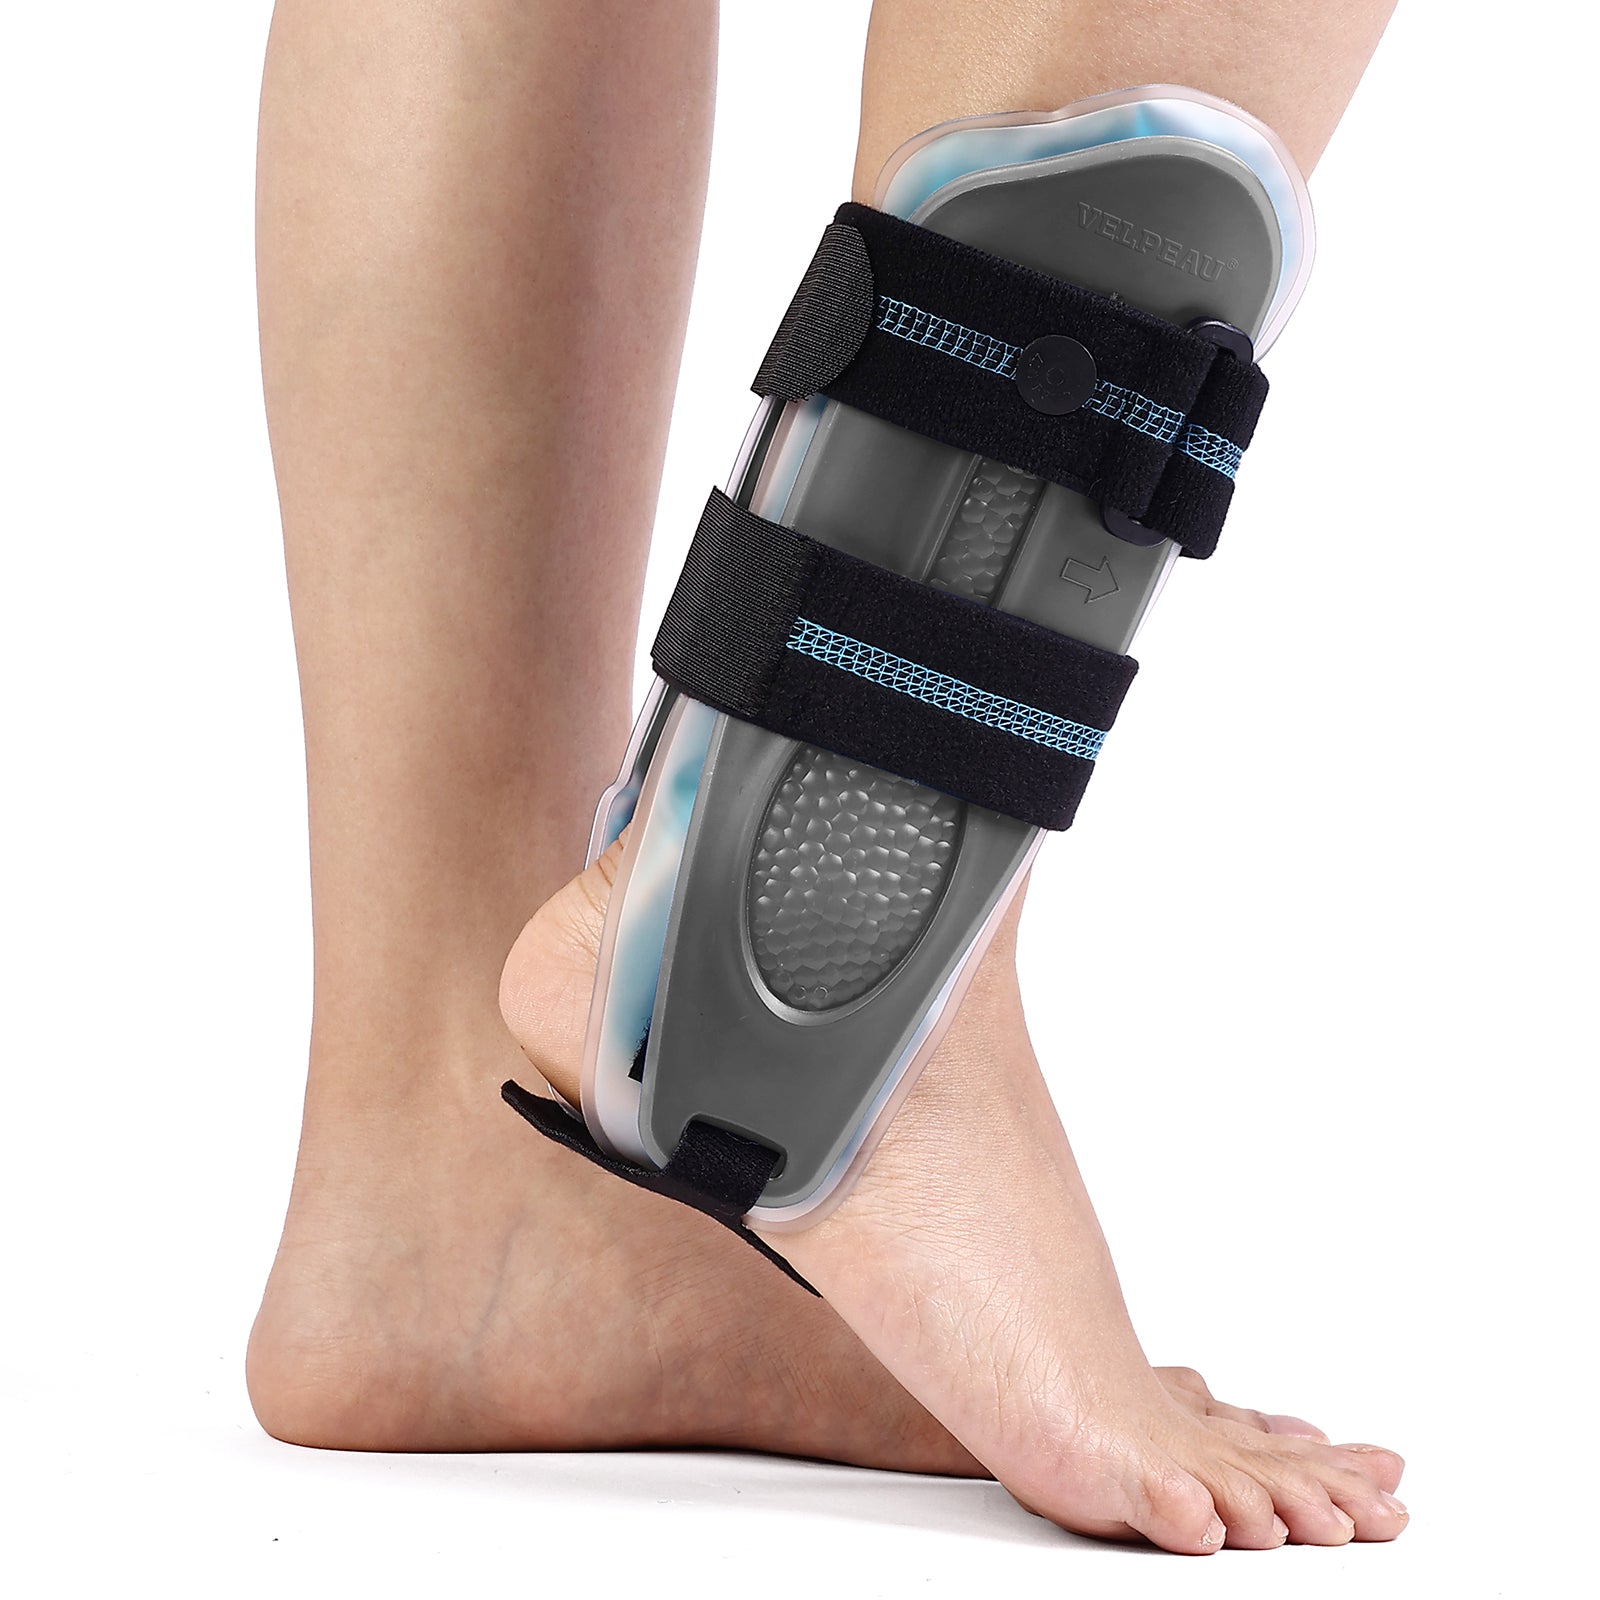 VELPEAU Ankle Support Brace for Men & Women, Ankle Stabilizer